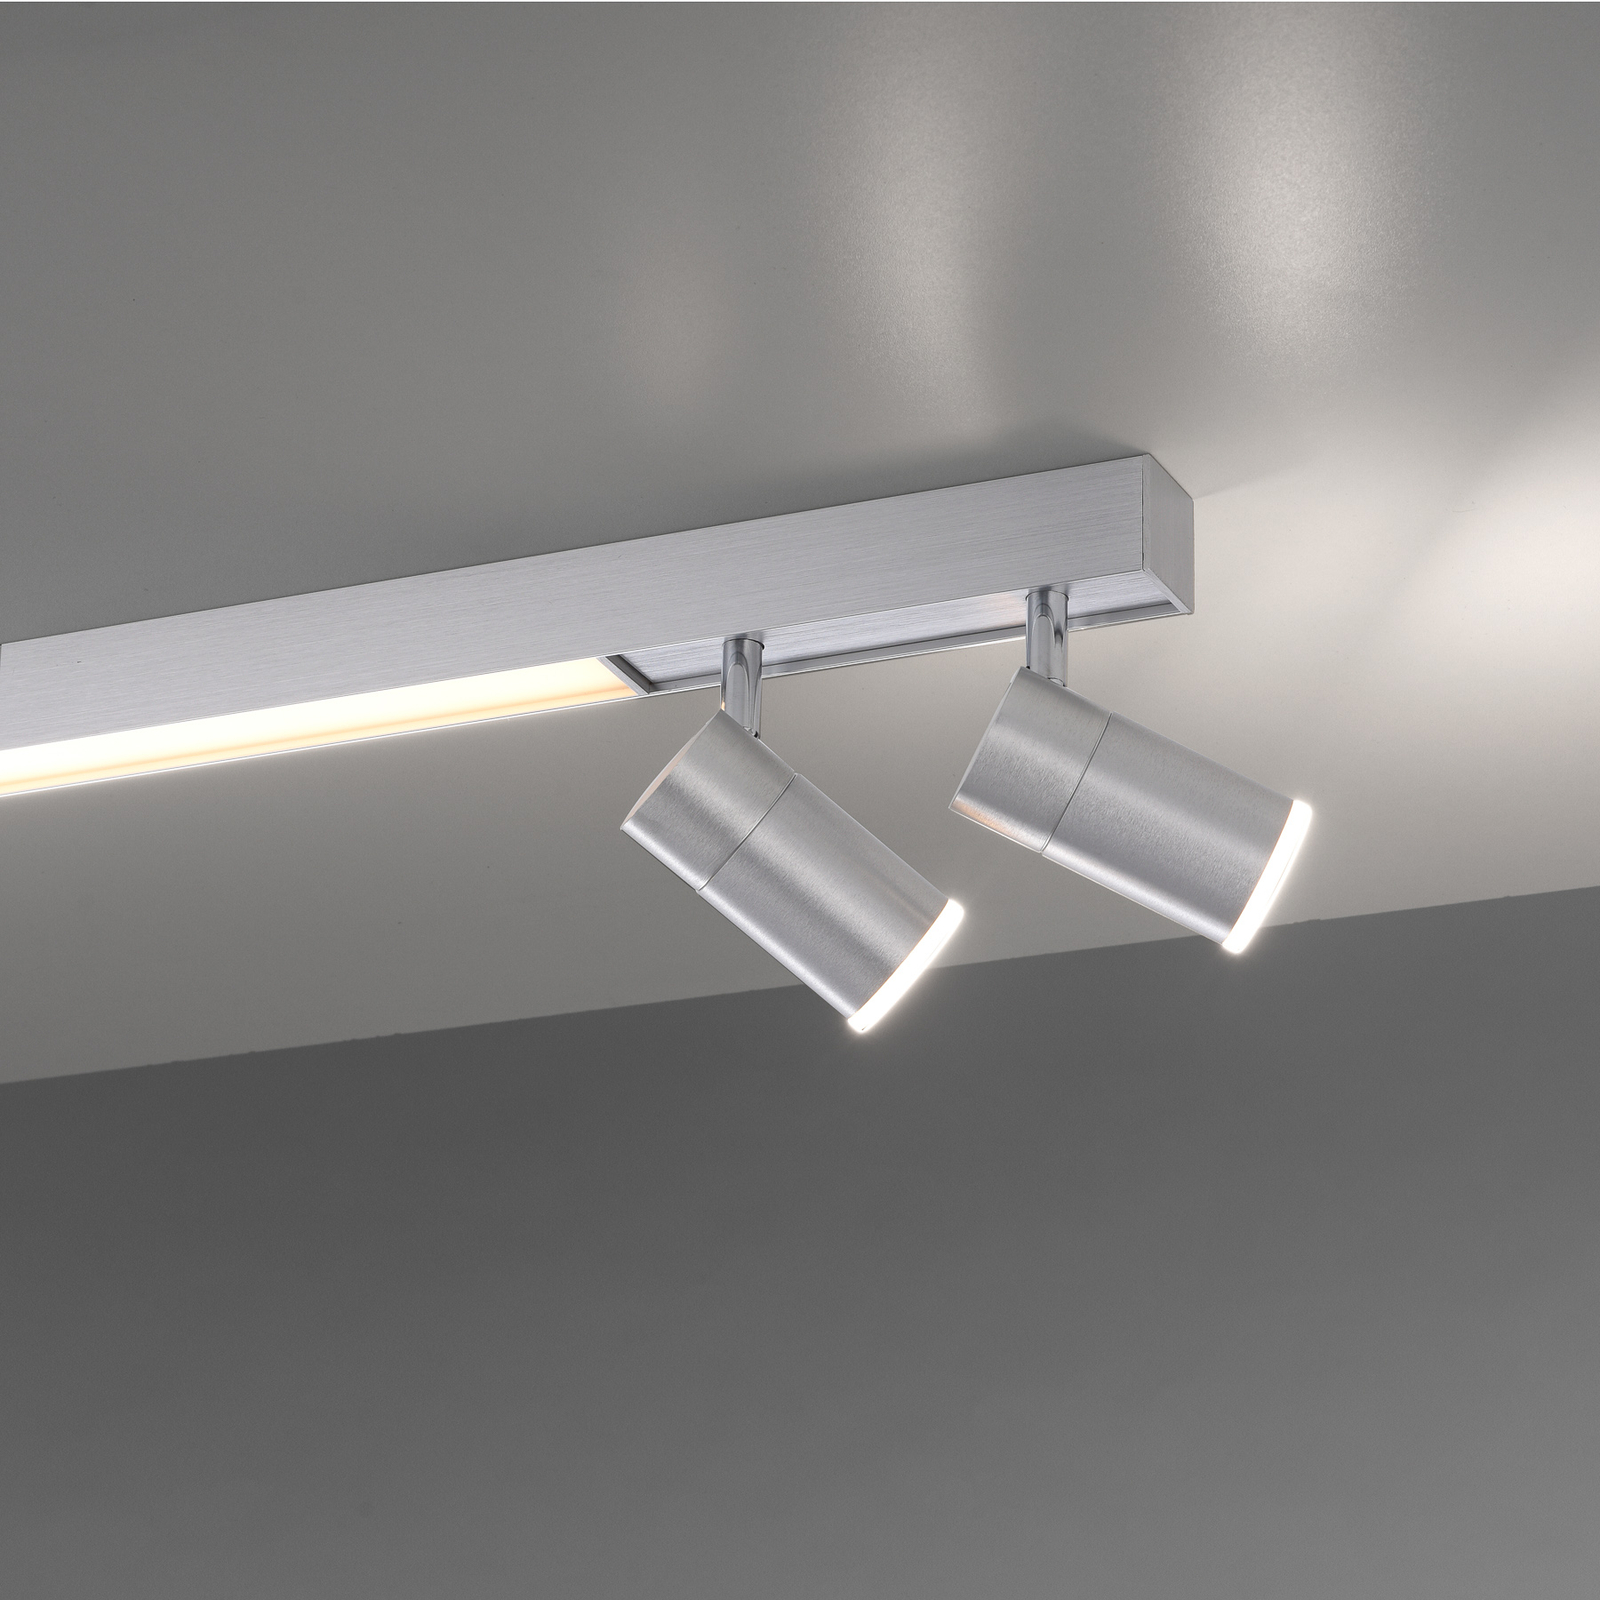 PURE Lines LED ceiling light 4-bulb aluminium